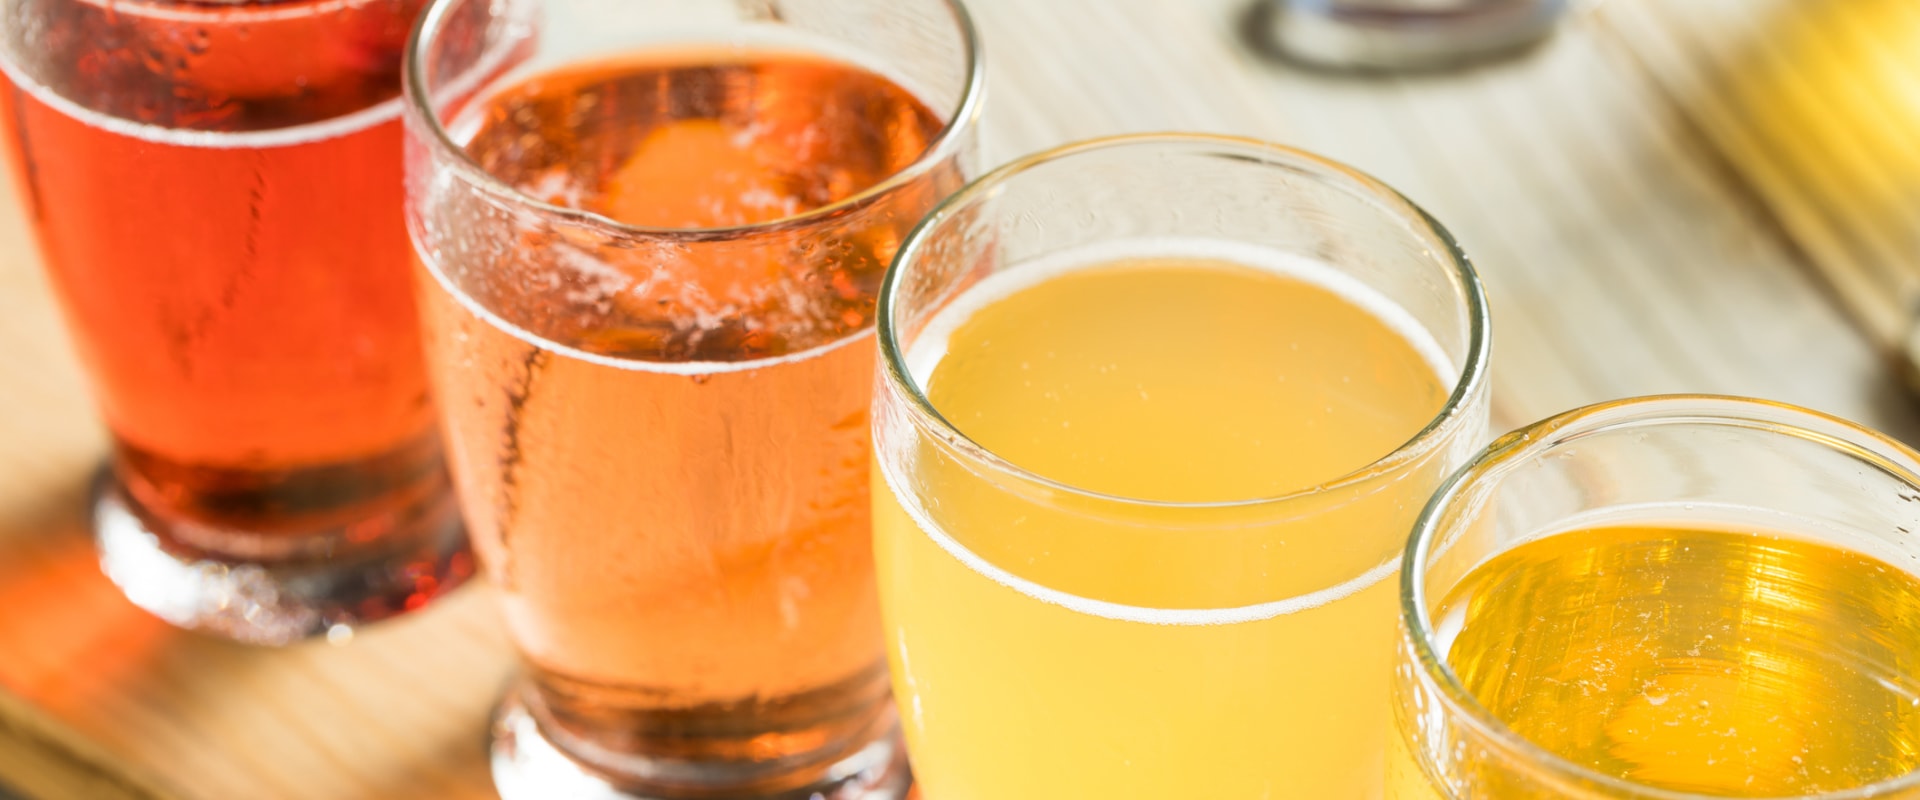 Does cider have more sugar than beer?